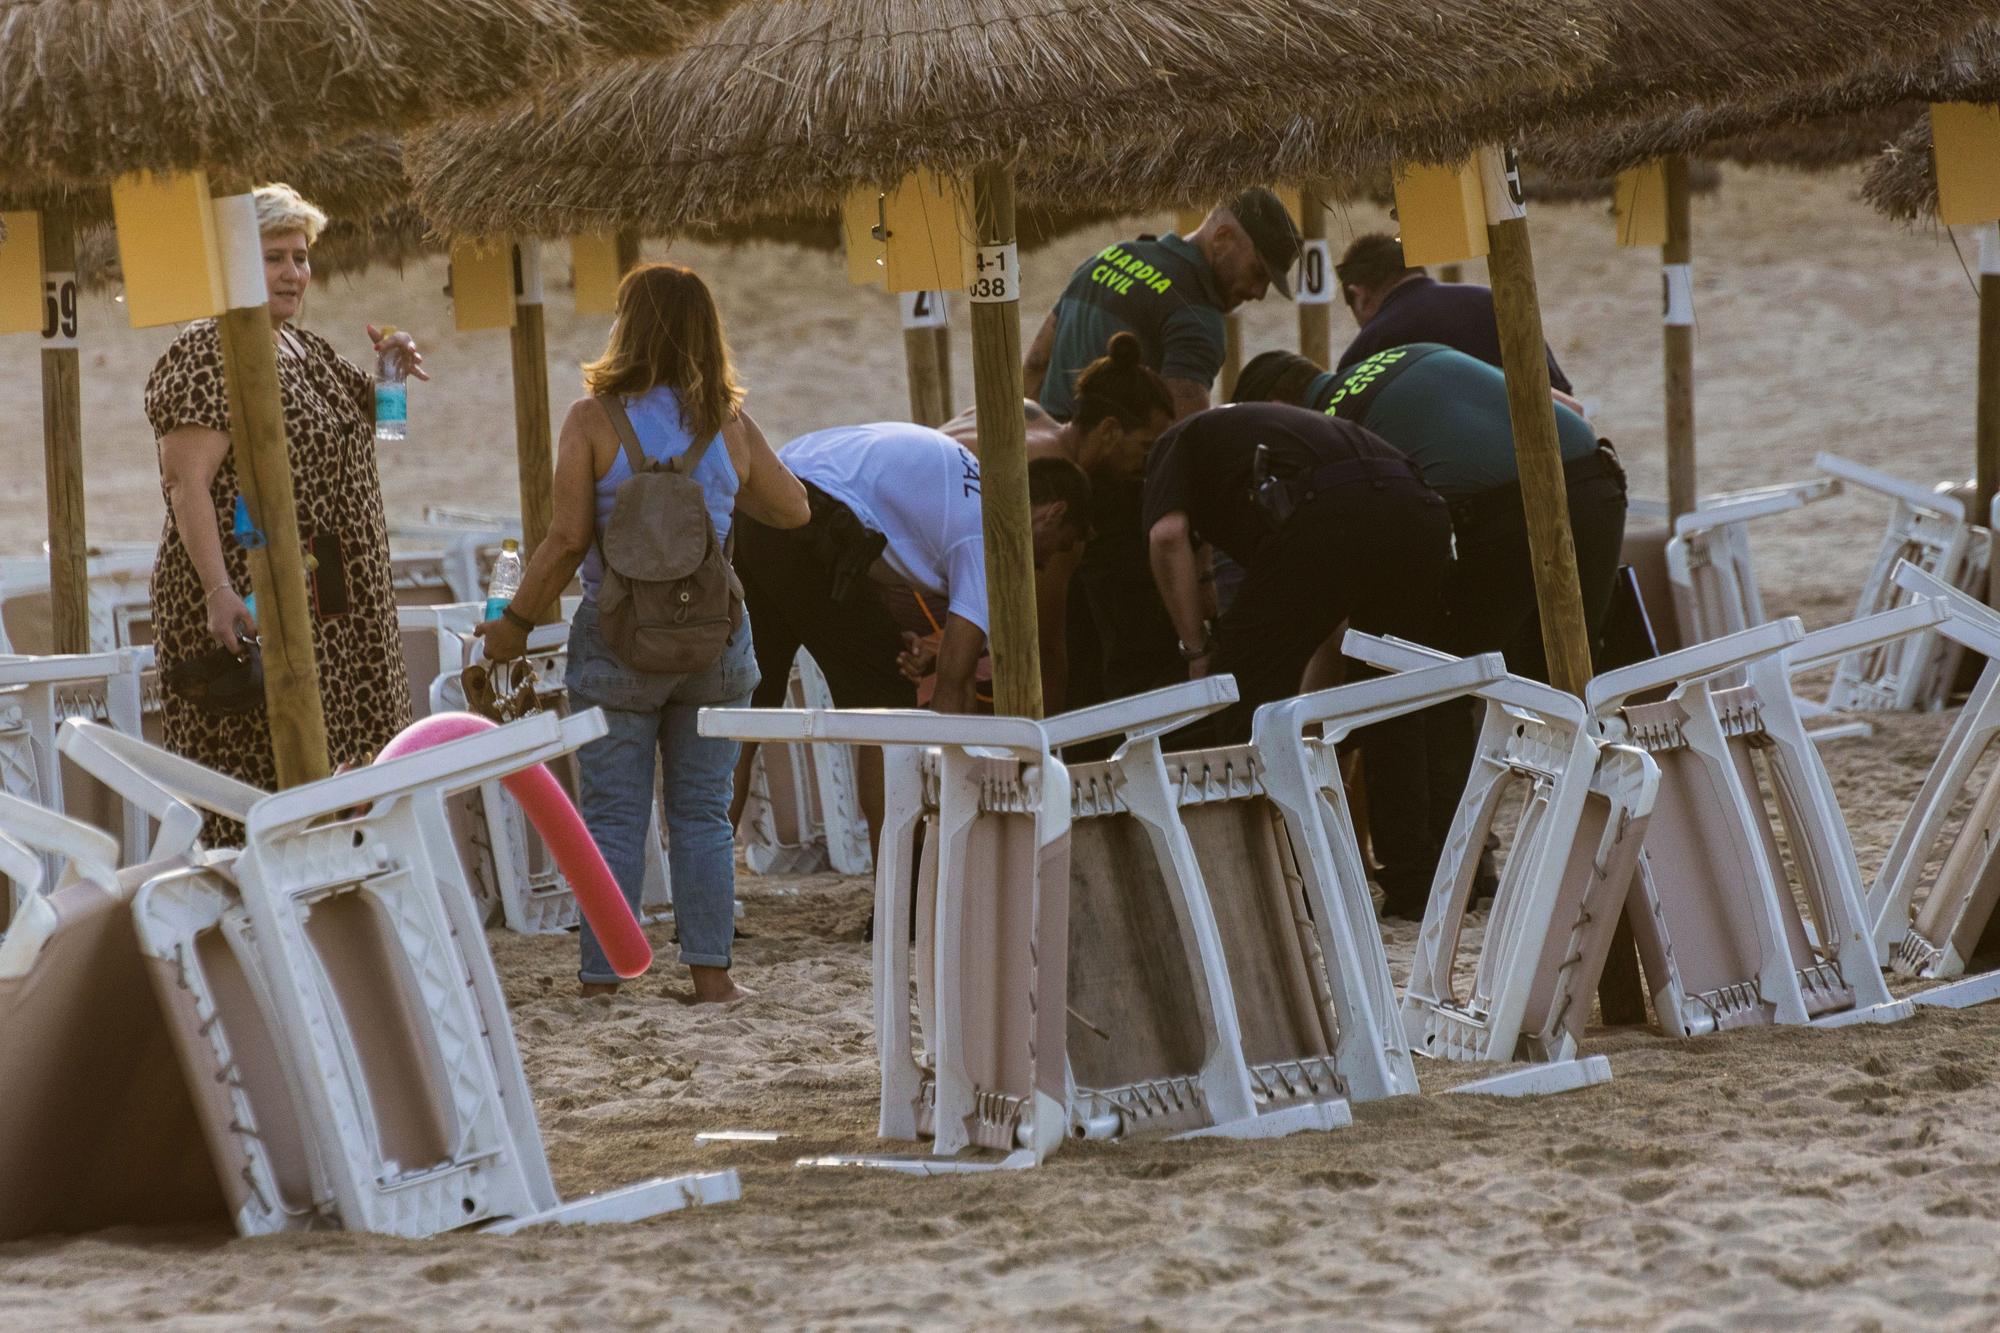 Un rayo mata a dos turistas en la playa de Cala Mesquida